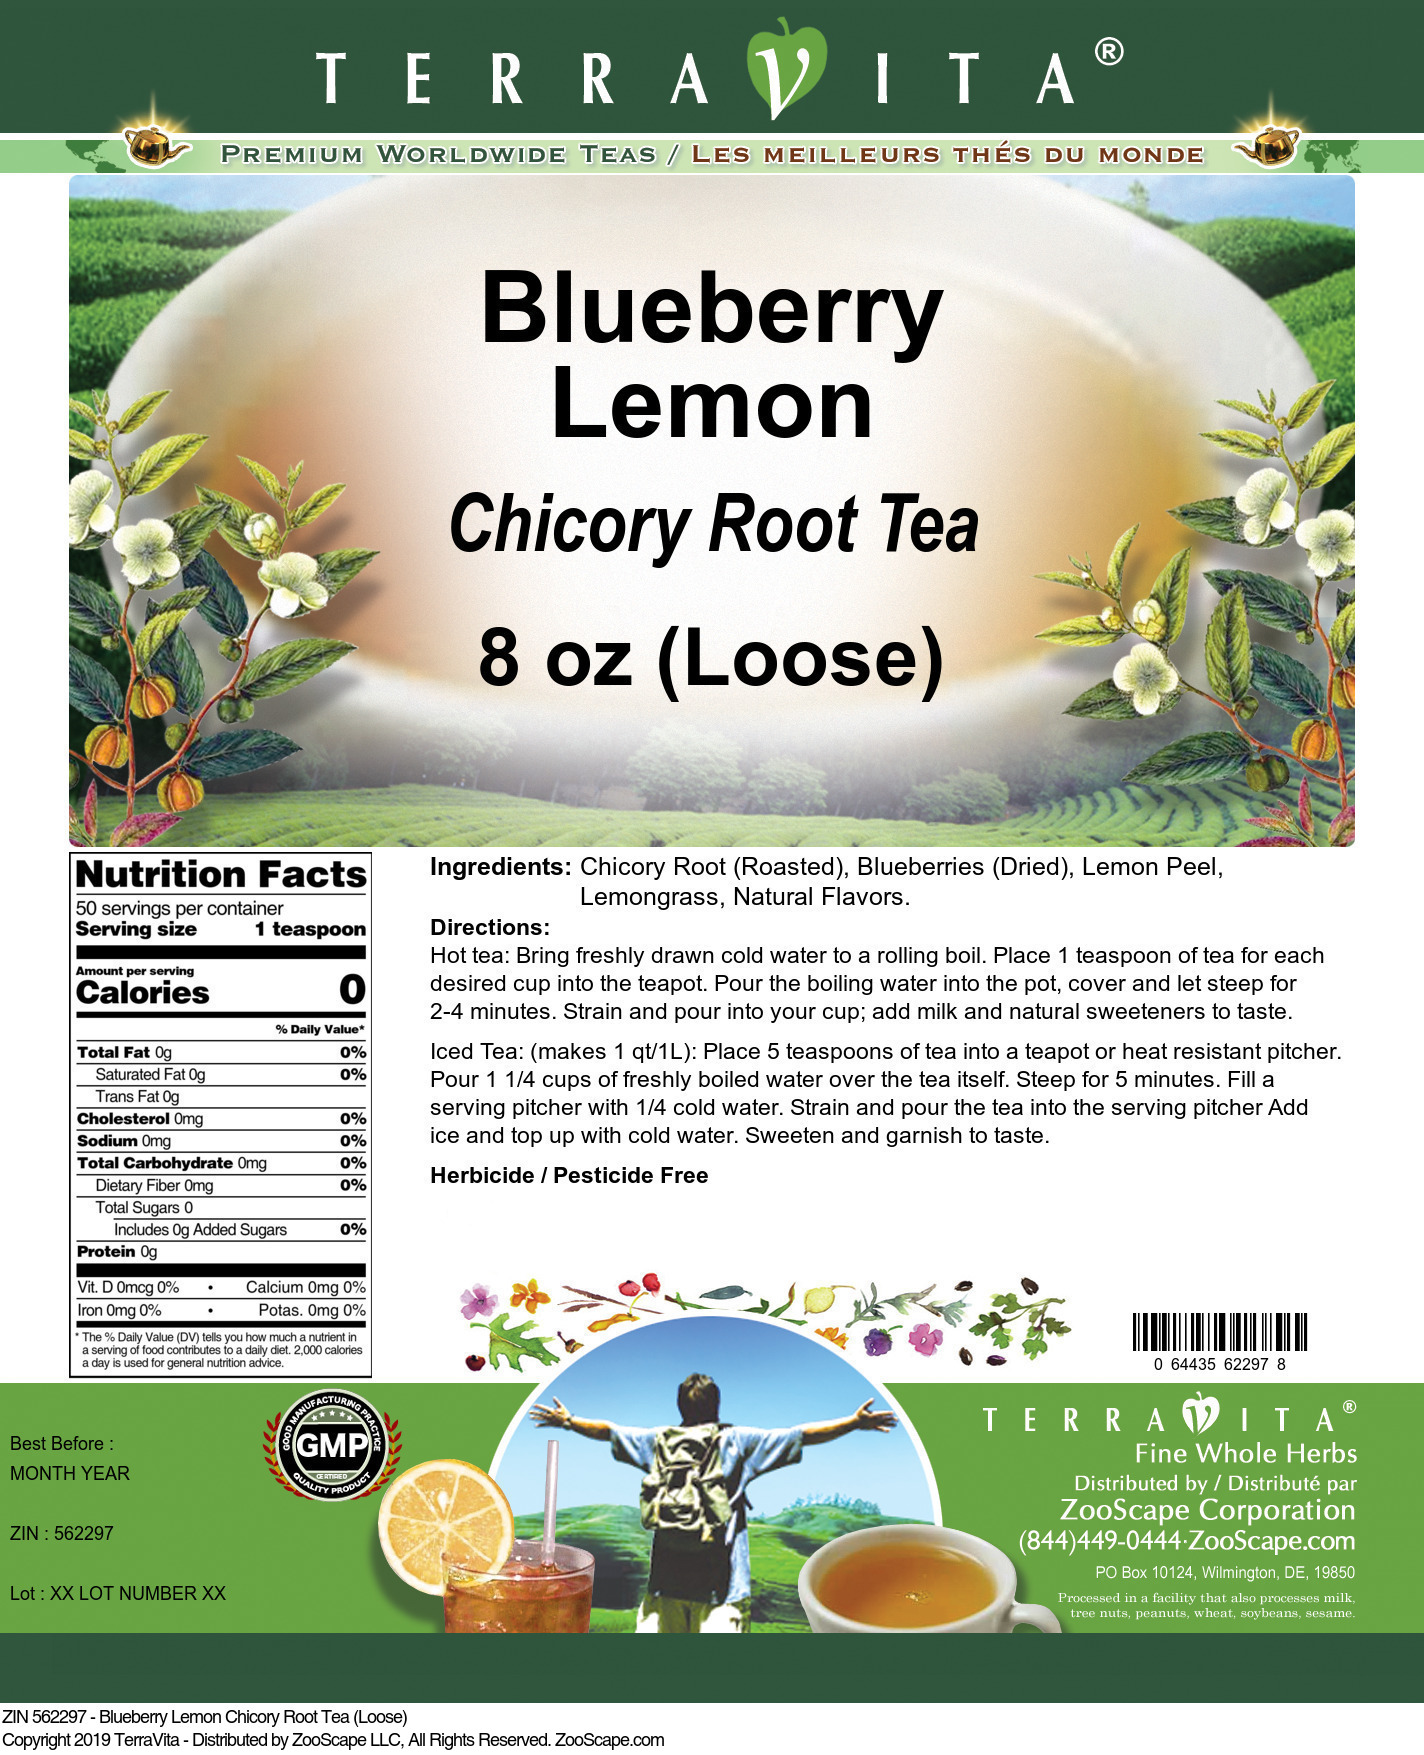 Blueberry Lemon Chicory Root Tea (Loose) - Label